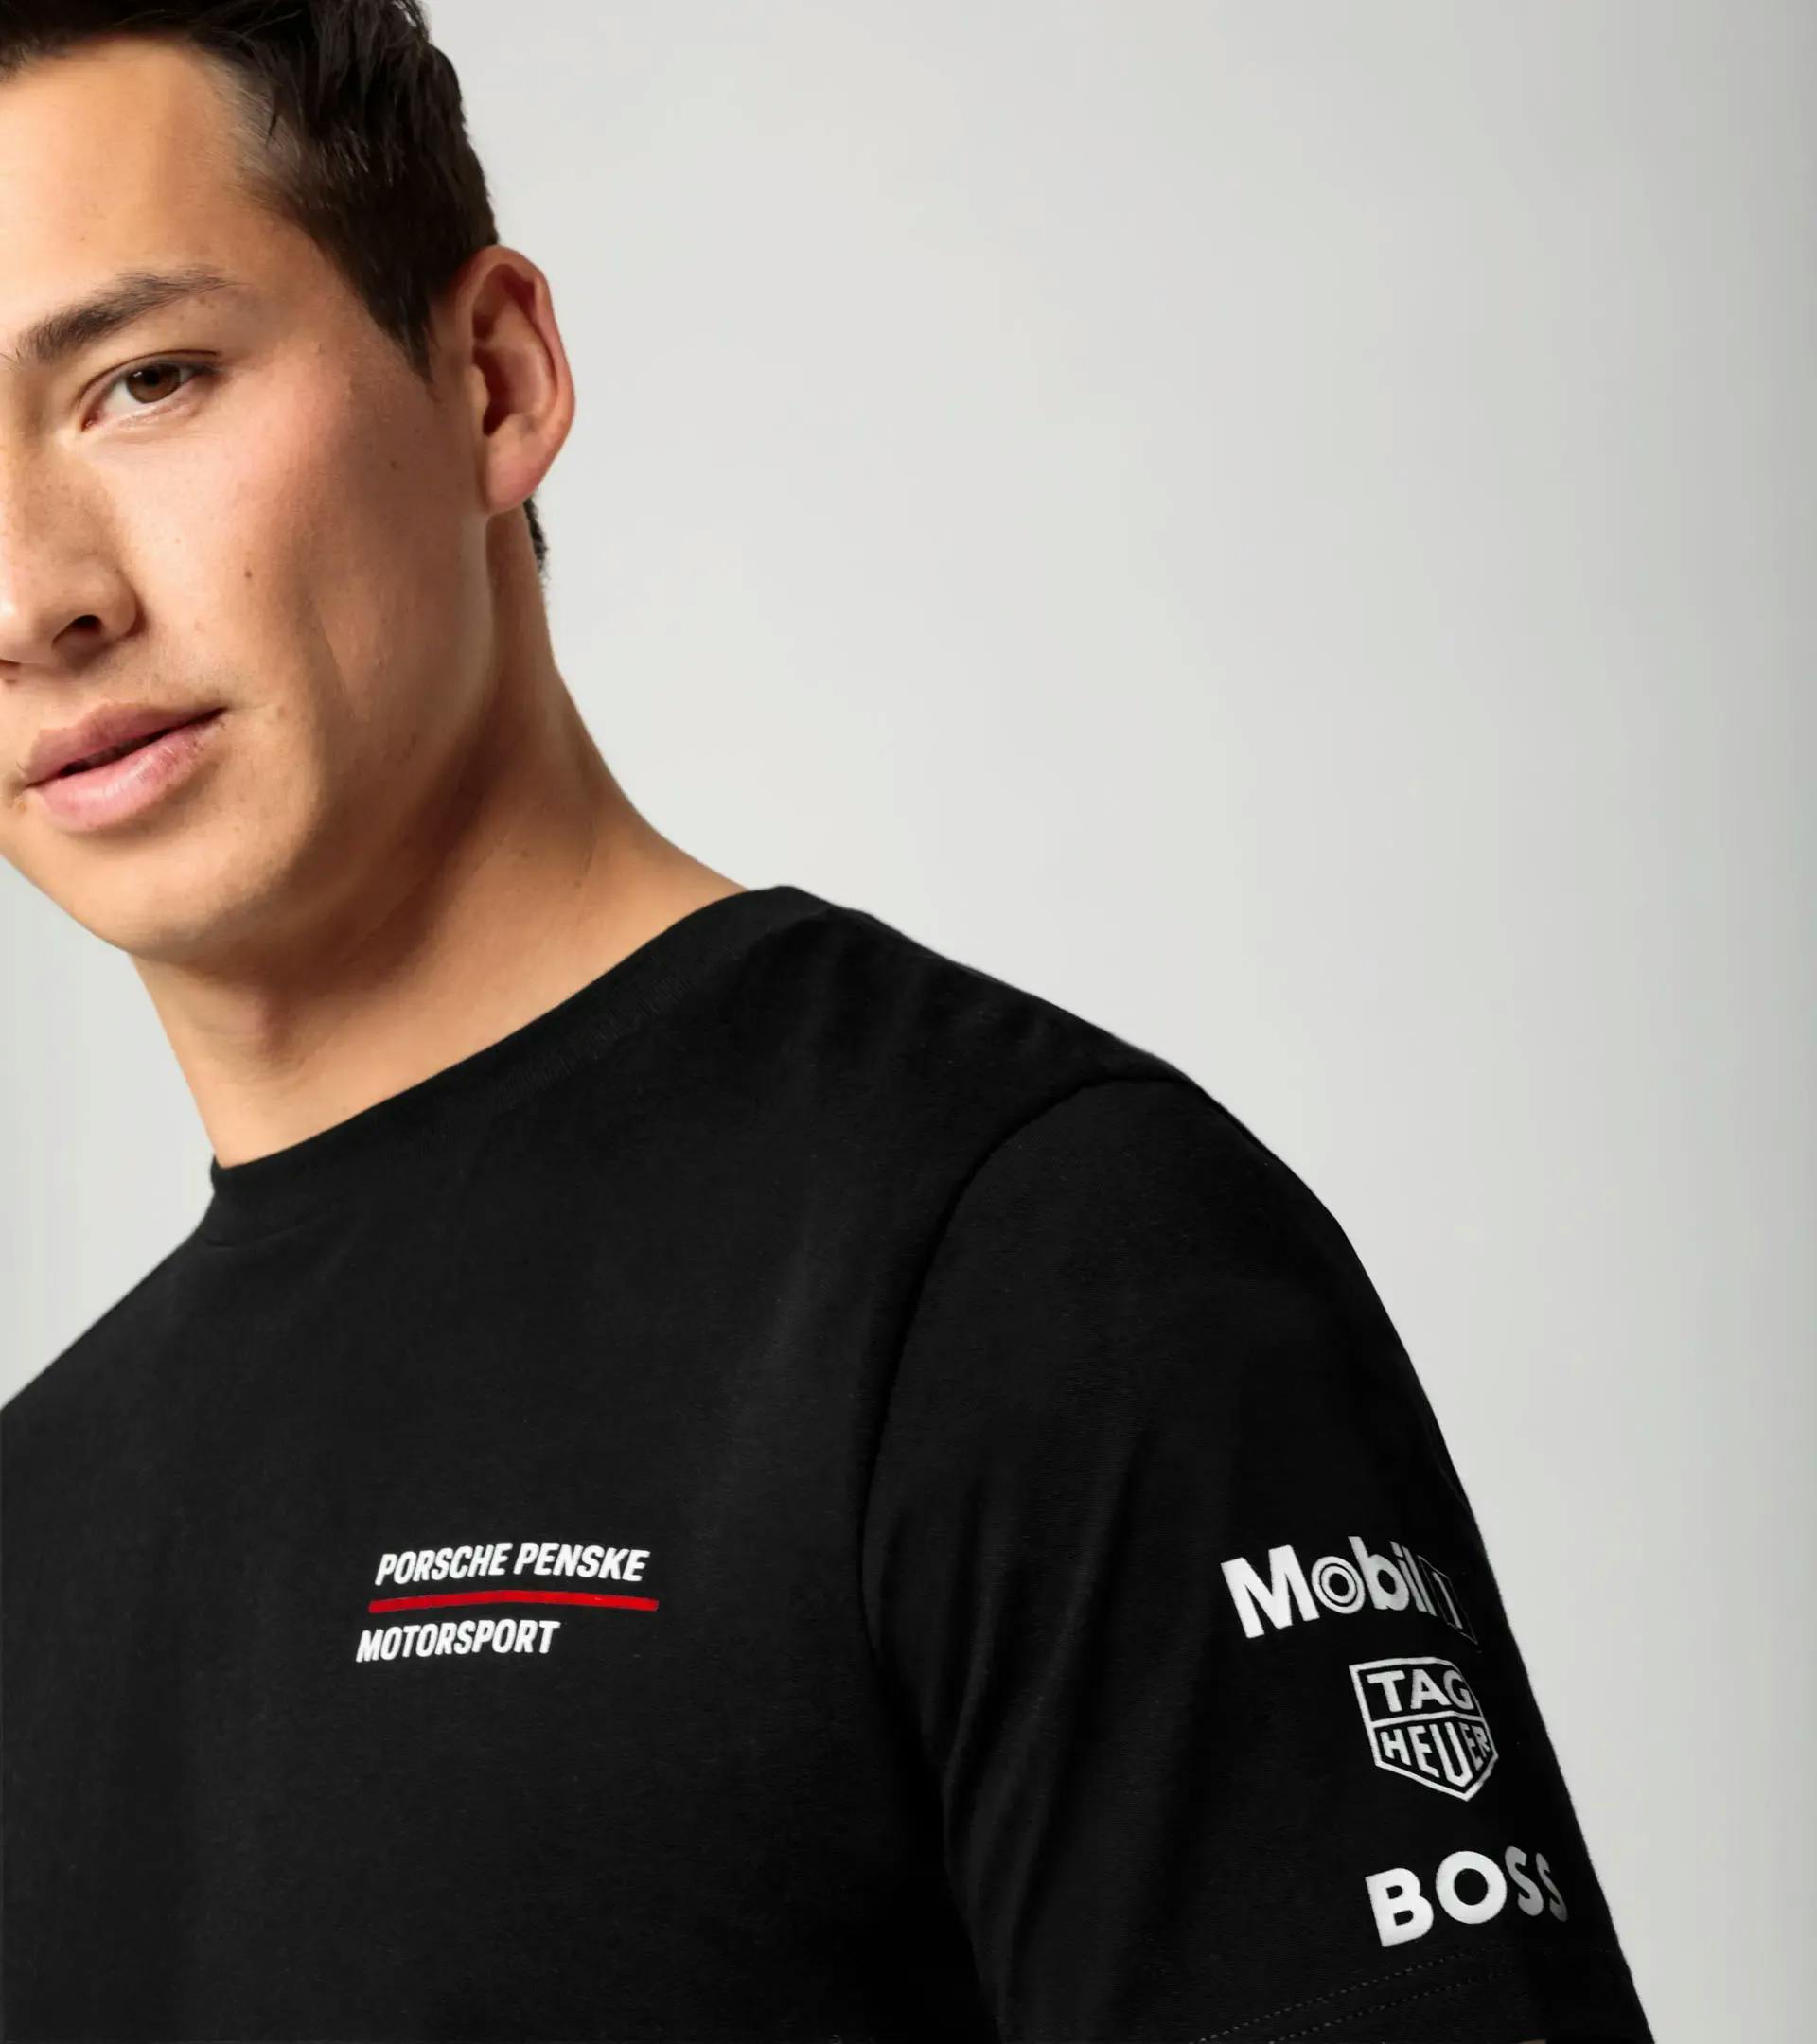 Camiseta unisex – Porsche Penske Motorsport 4